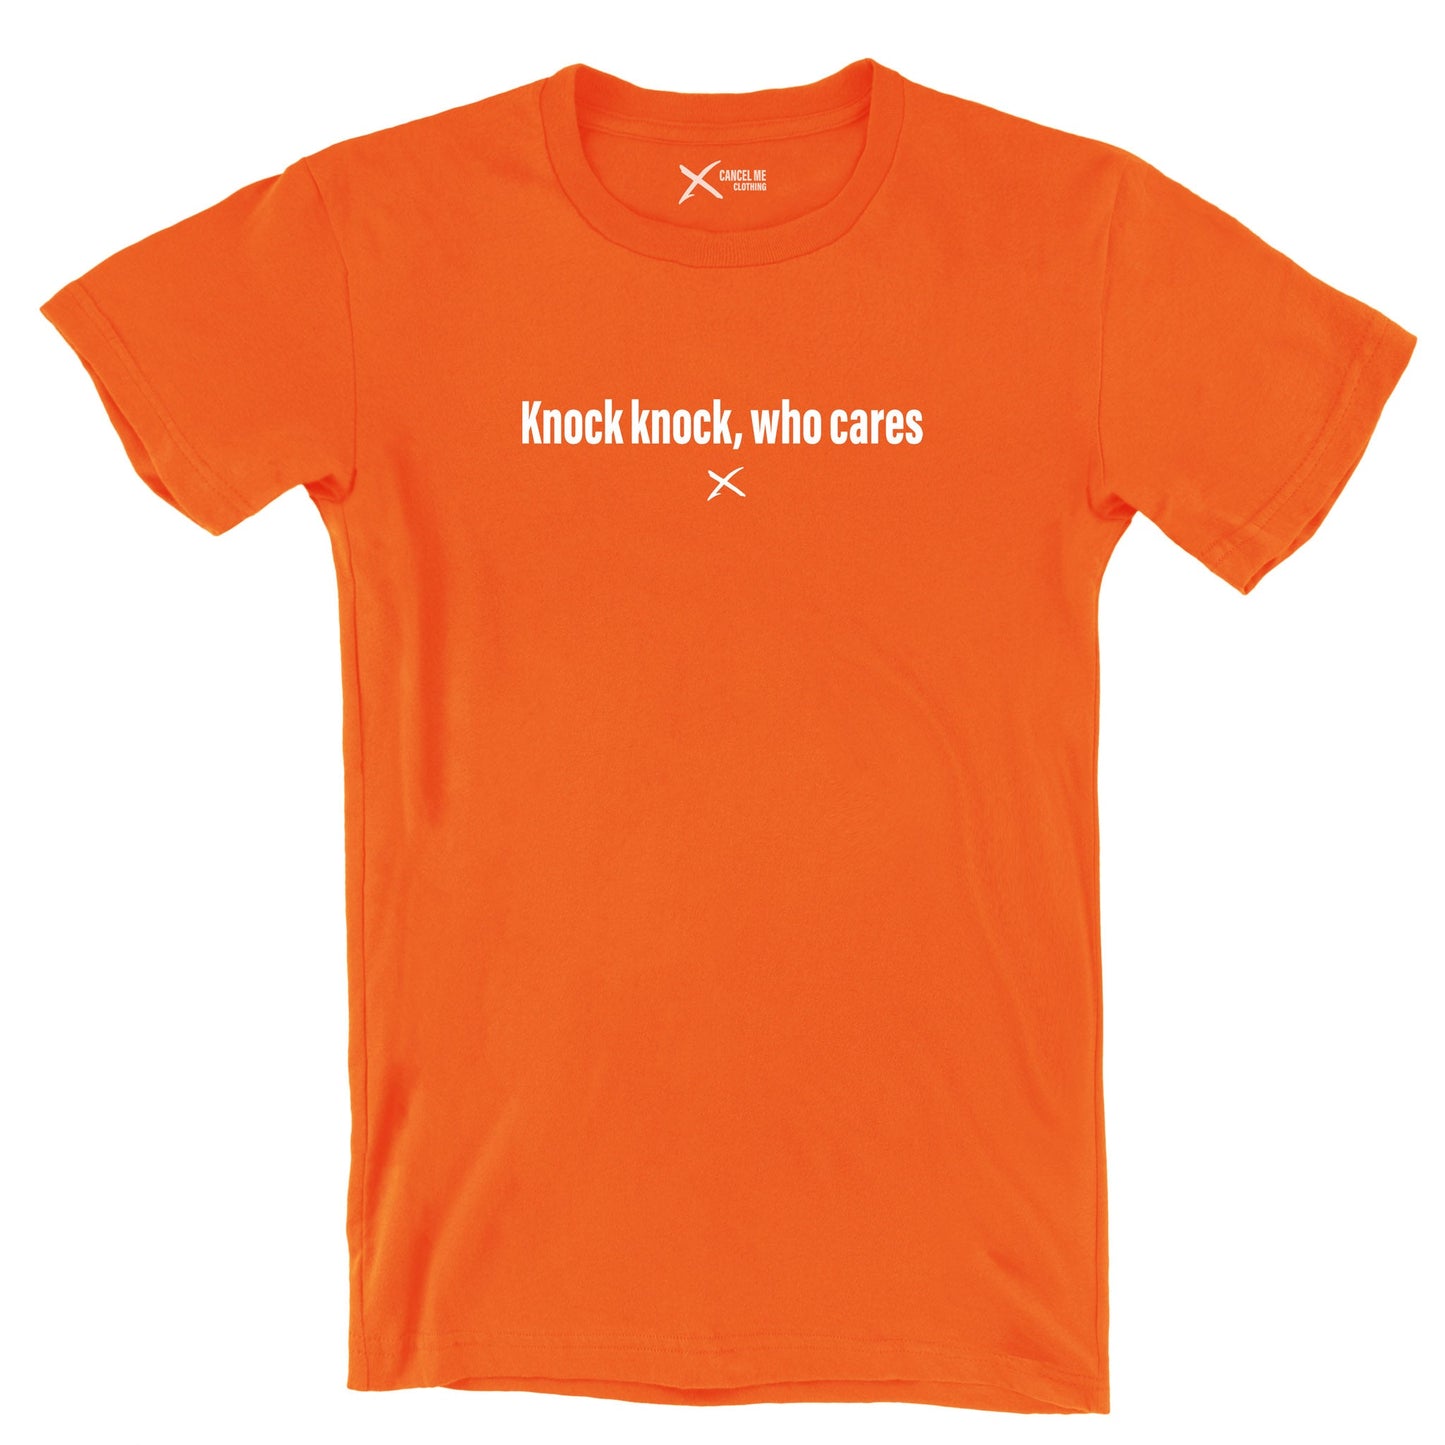 Knock knock, who cares - Shirt